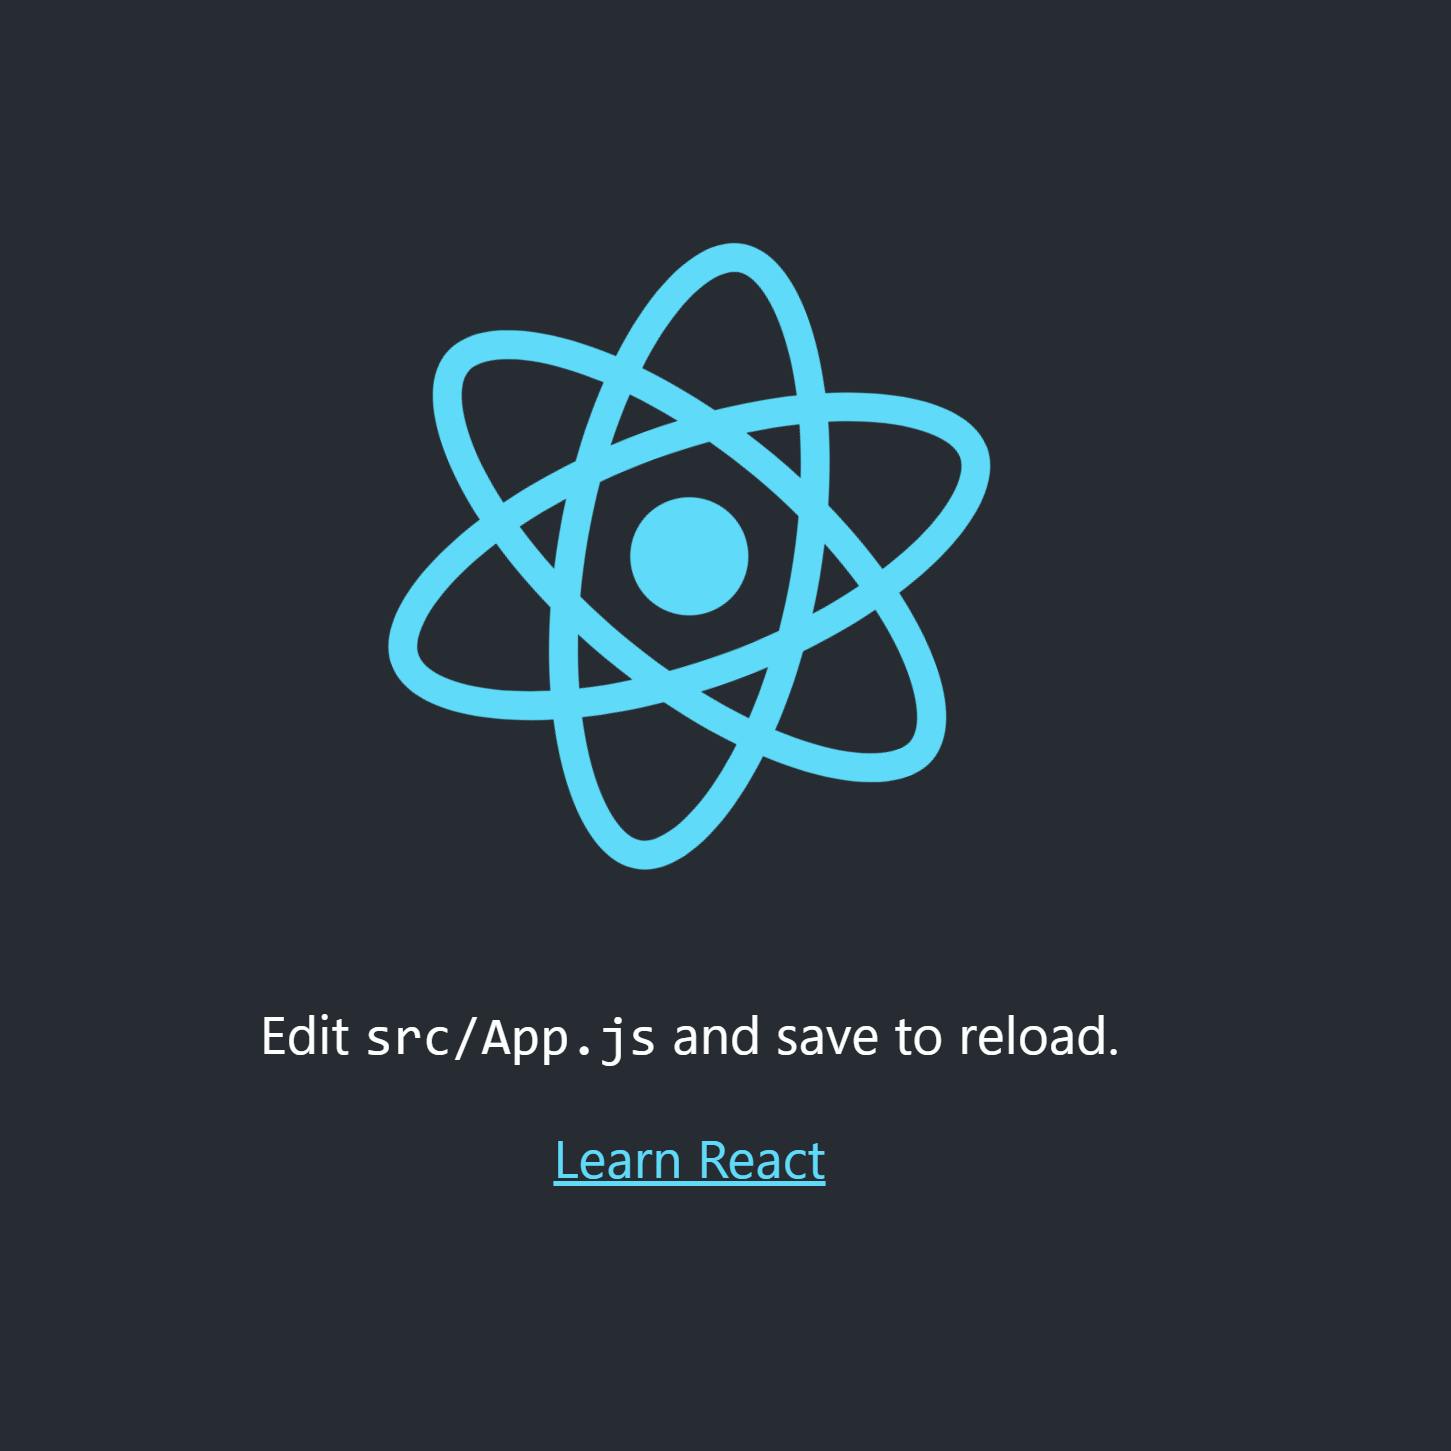 create-react-app starting page